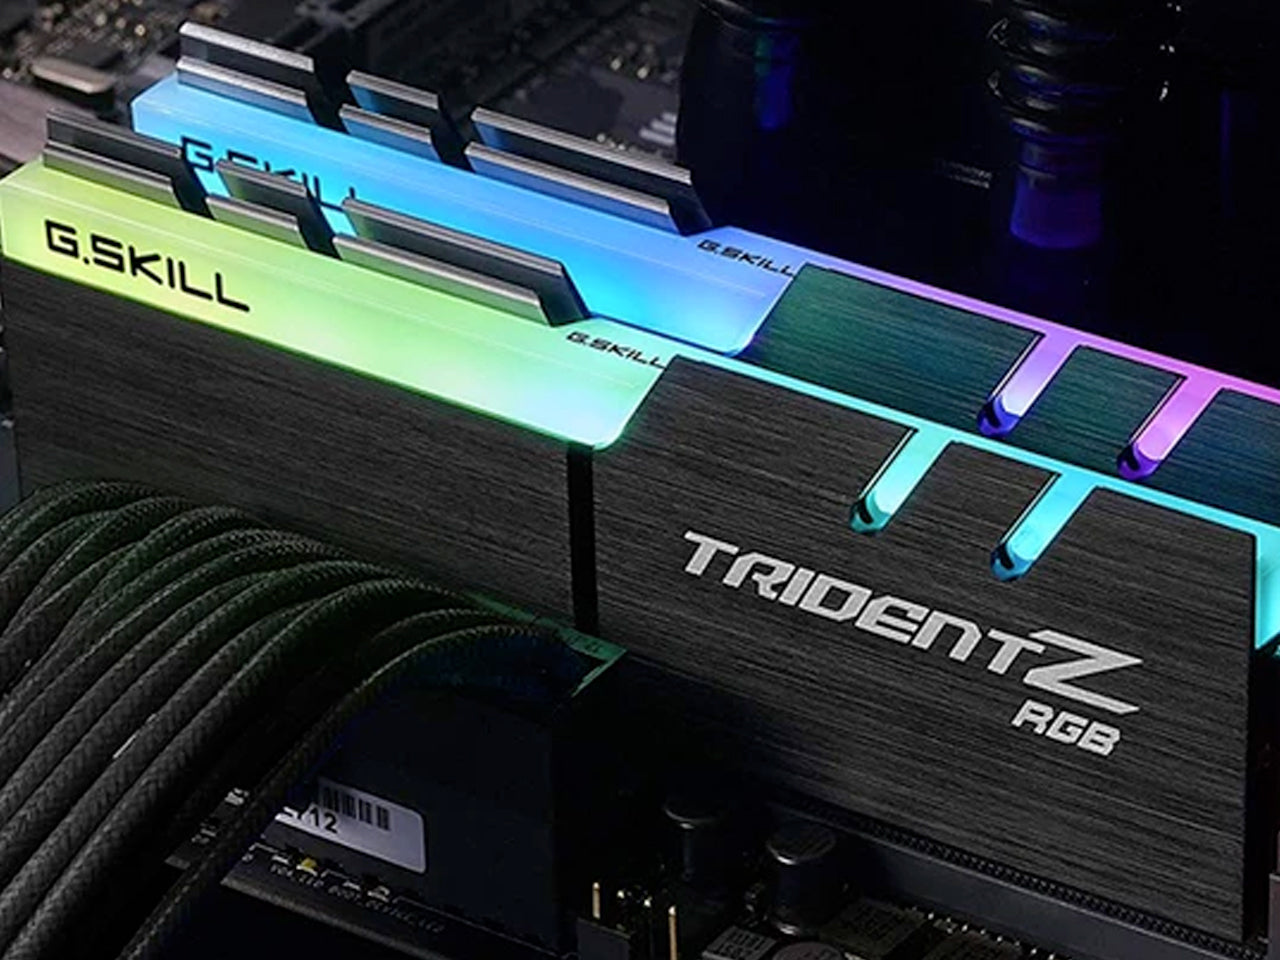 G.SKILL TRIDENT Z 8GB (8GB X 1) RGB DDR4 3000MHZ RAM